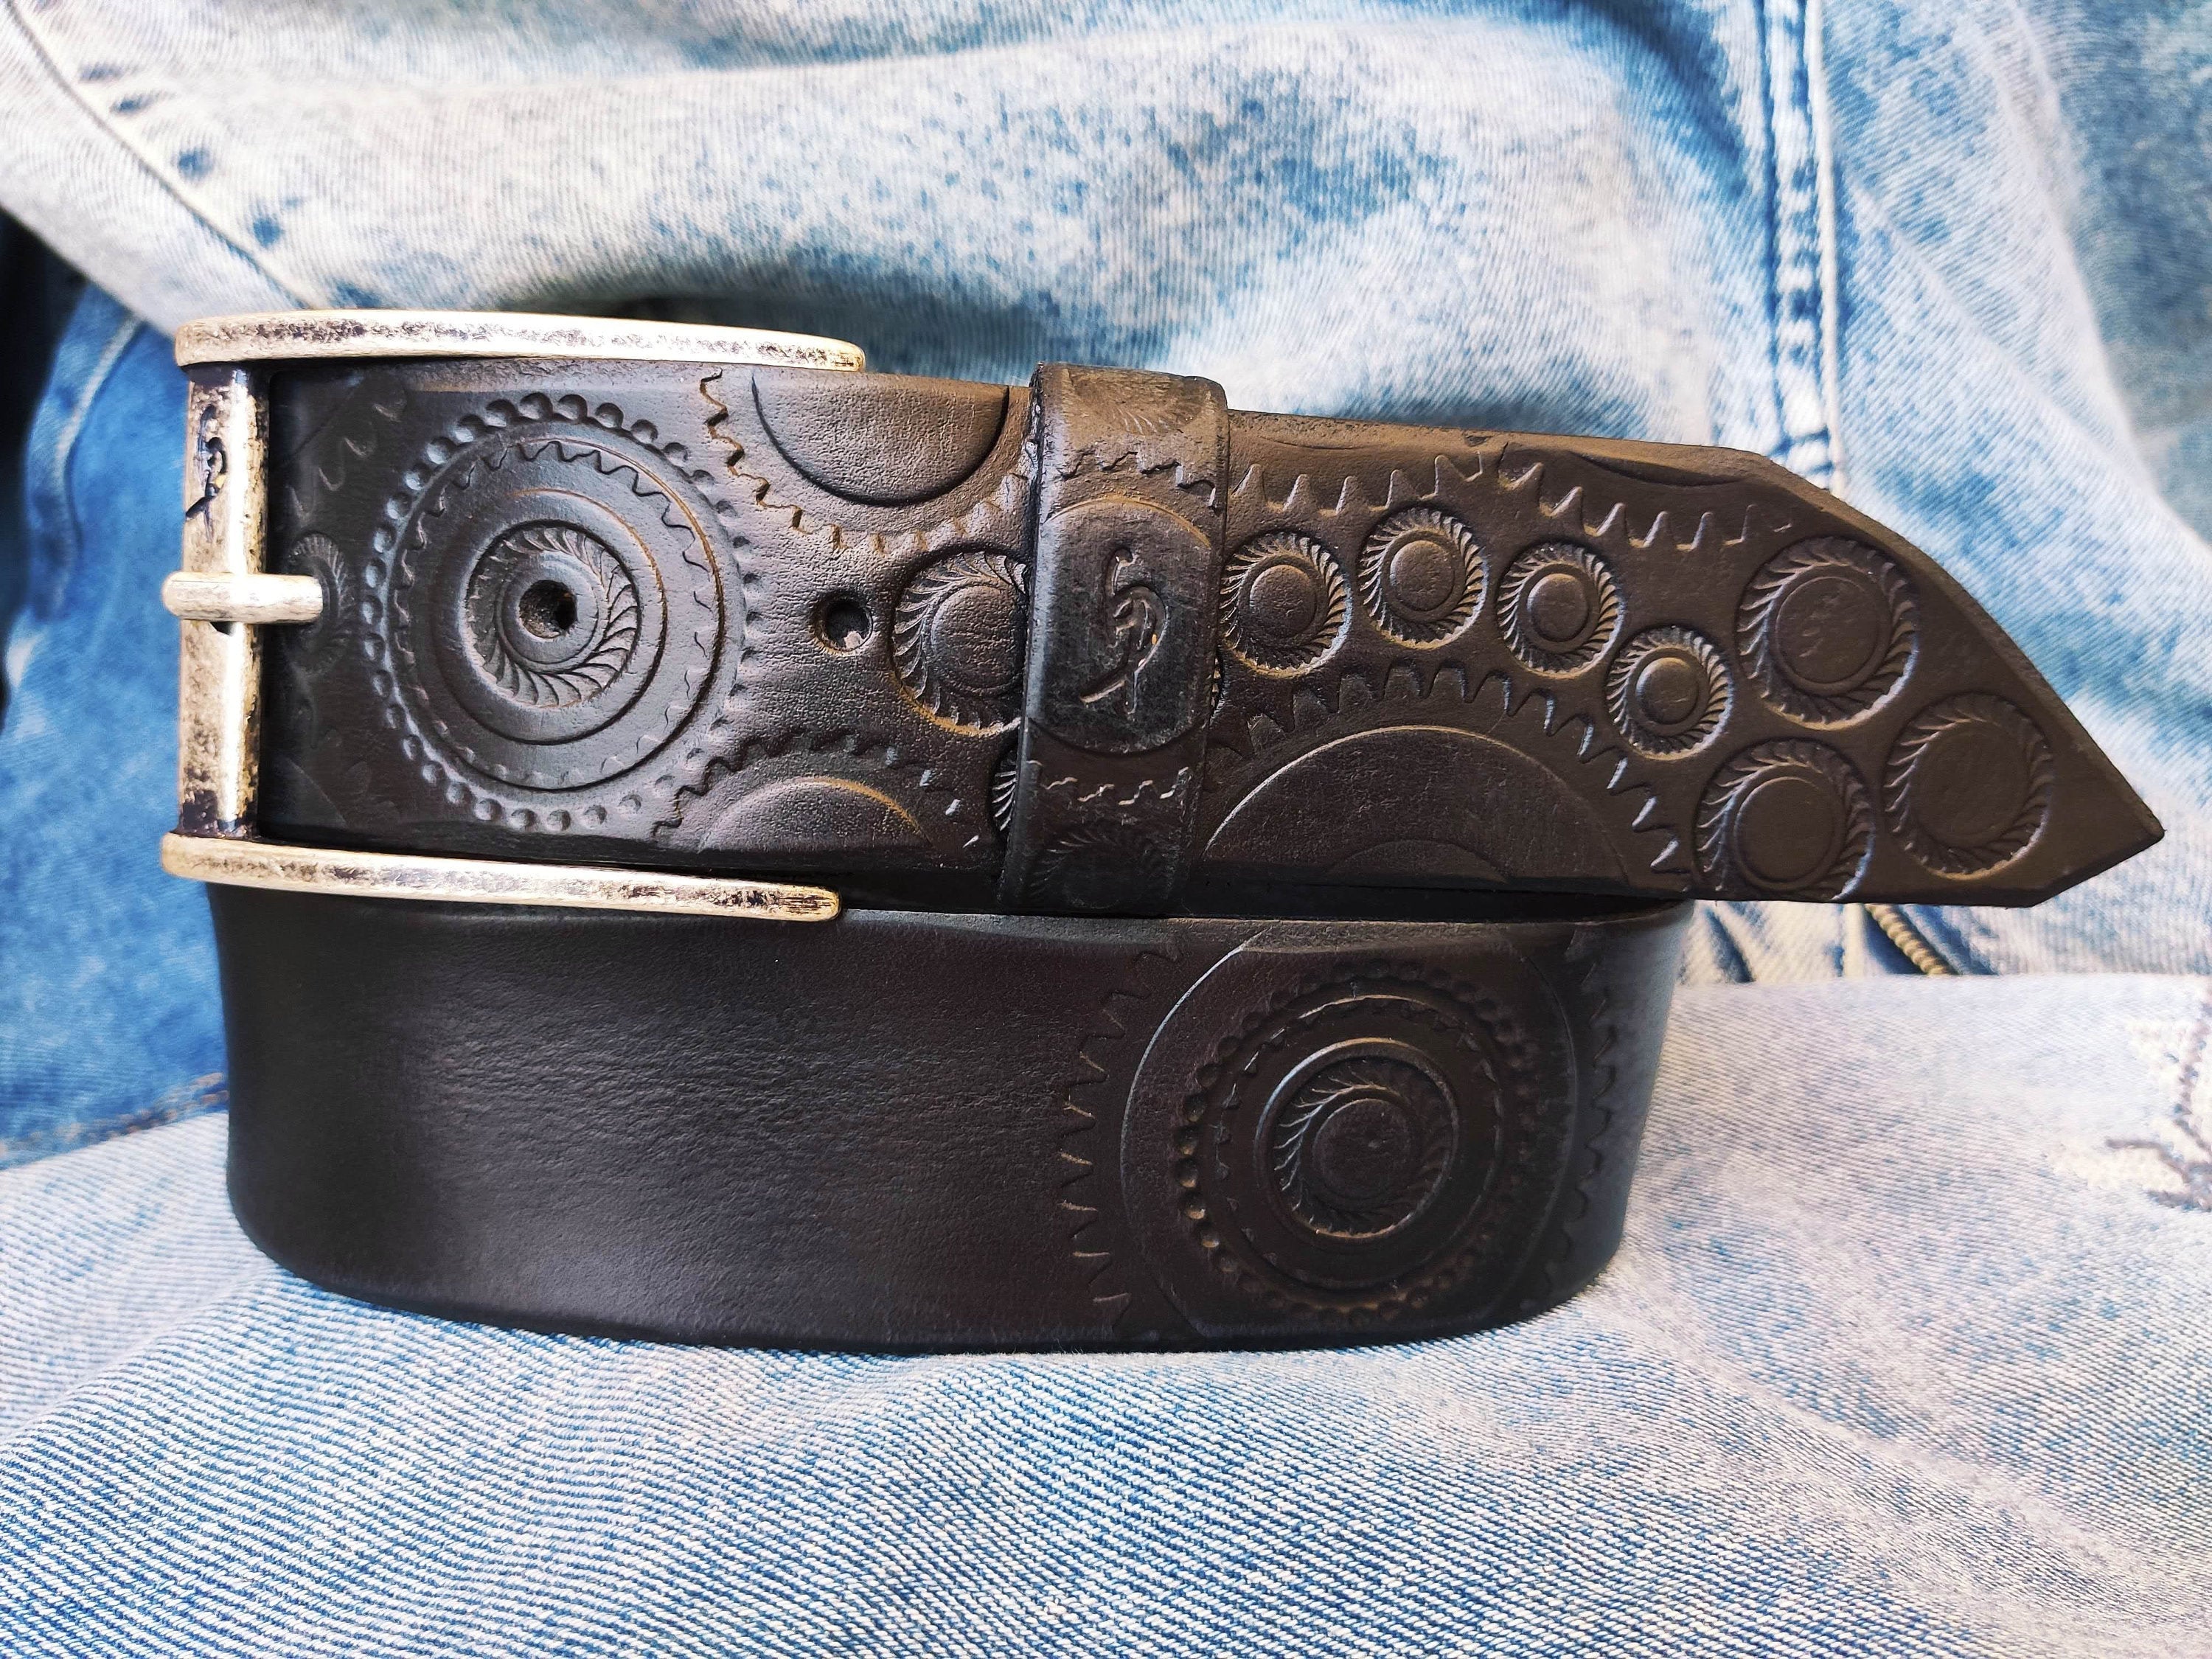 Millennial Belt Set - Black and Black Stitched Casual Belt Set 36 inch / Black / Zinc Alloy/Leather